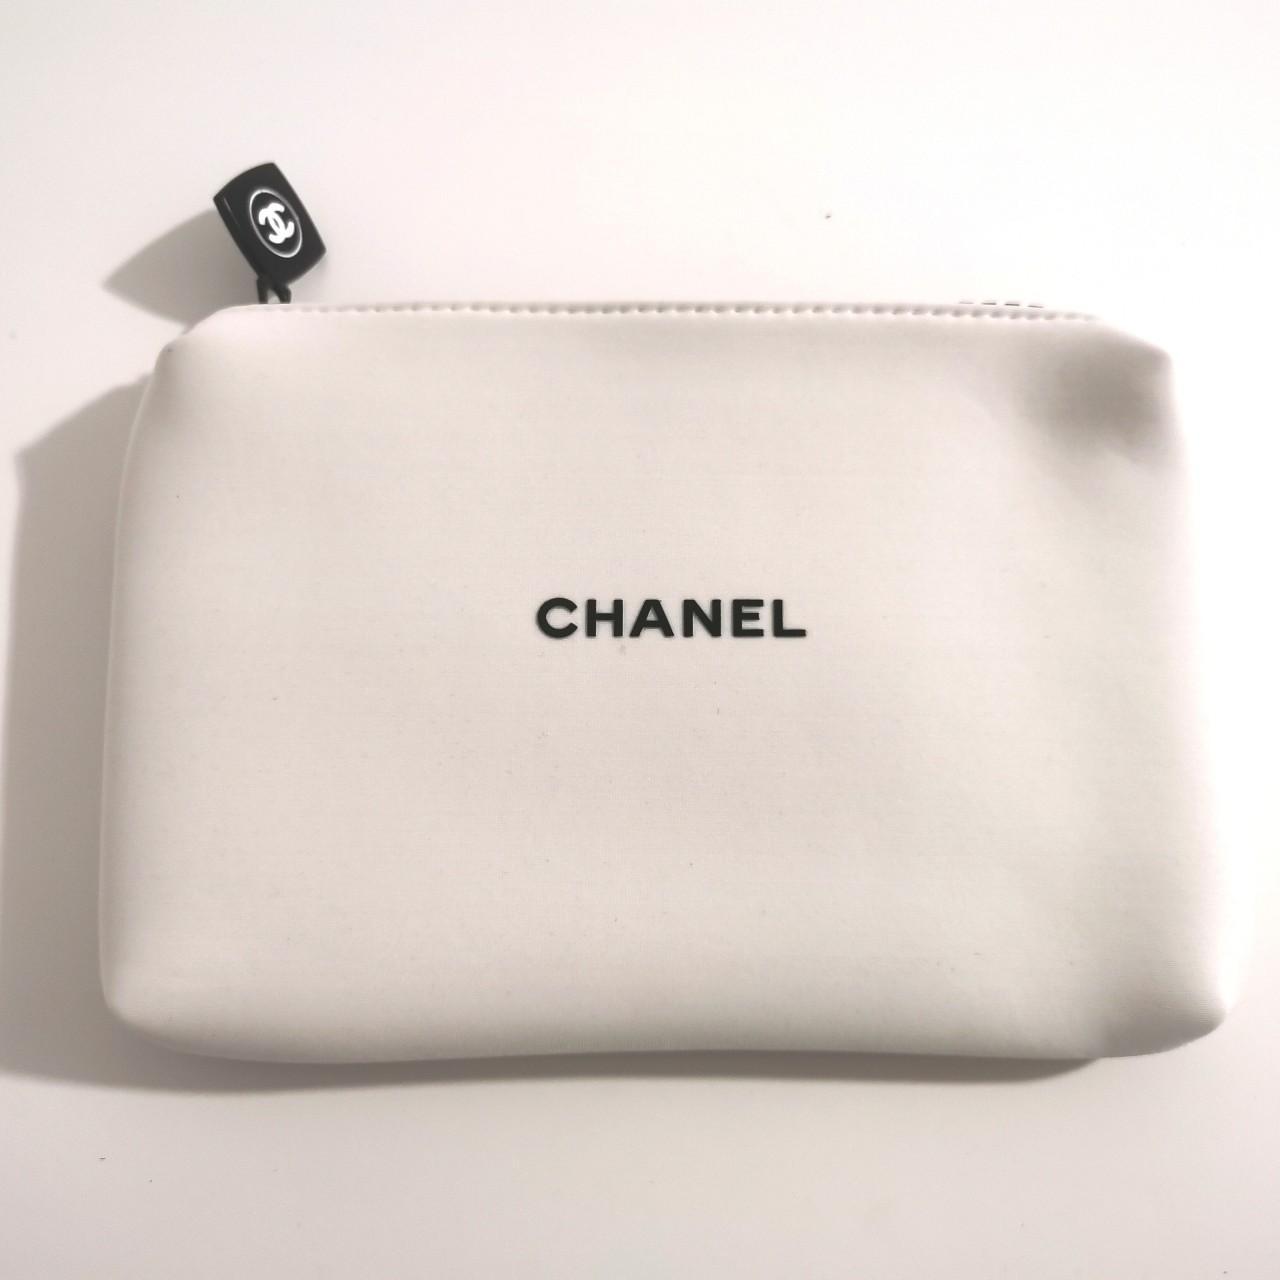 Chanel Makeup Cosmetic Neoprene White Bag Beauty VIP